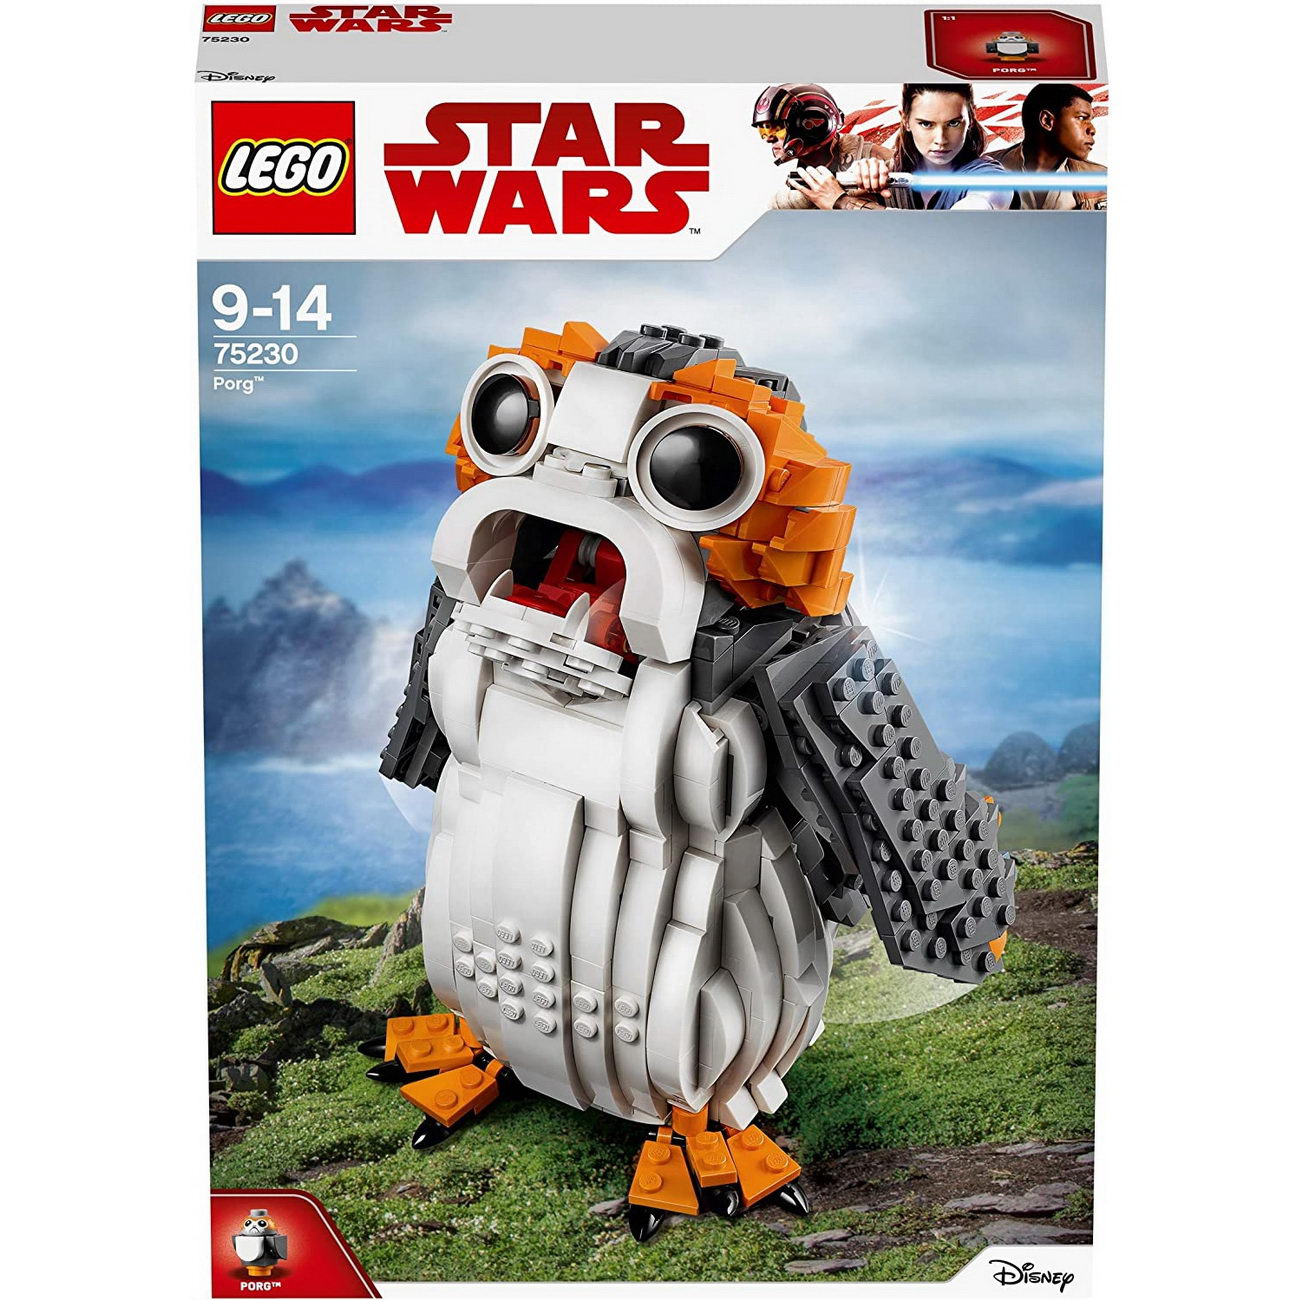 LEGO Star Wars 75230 - Porg